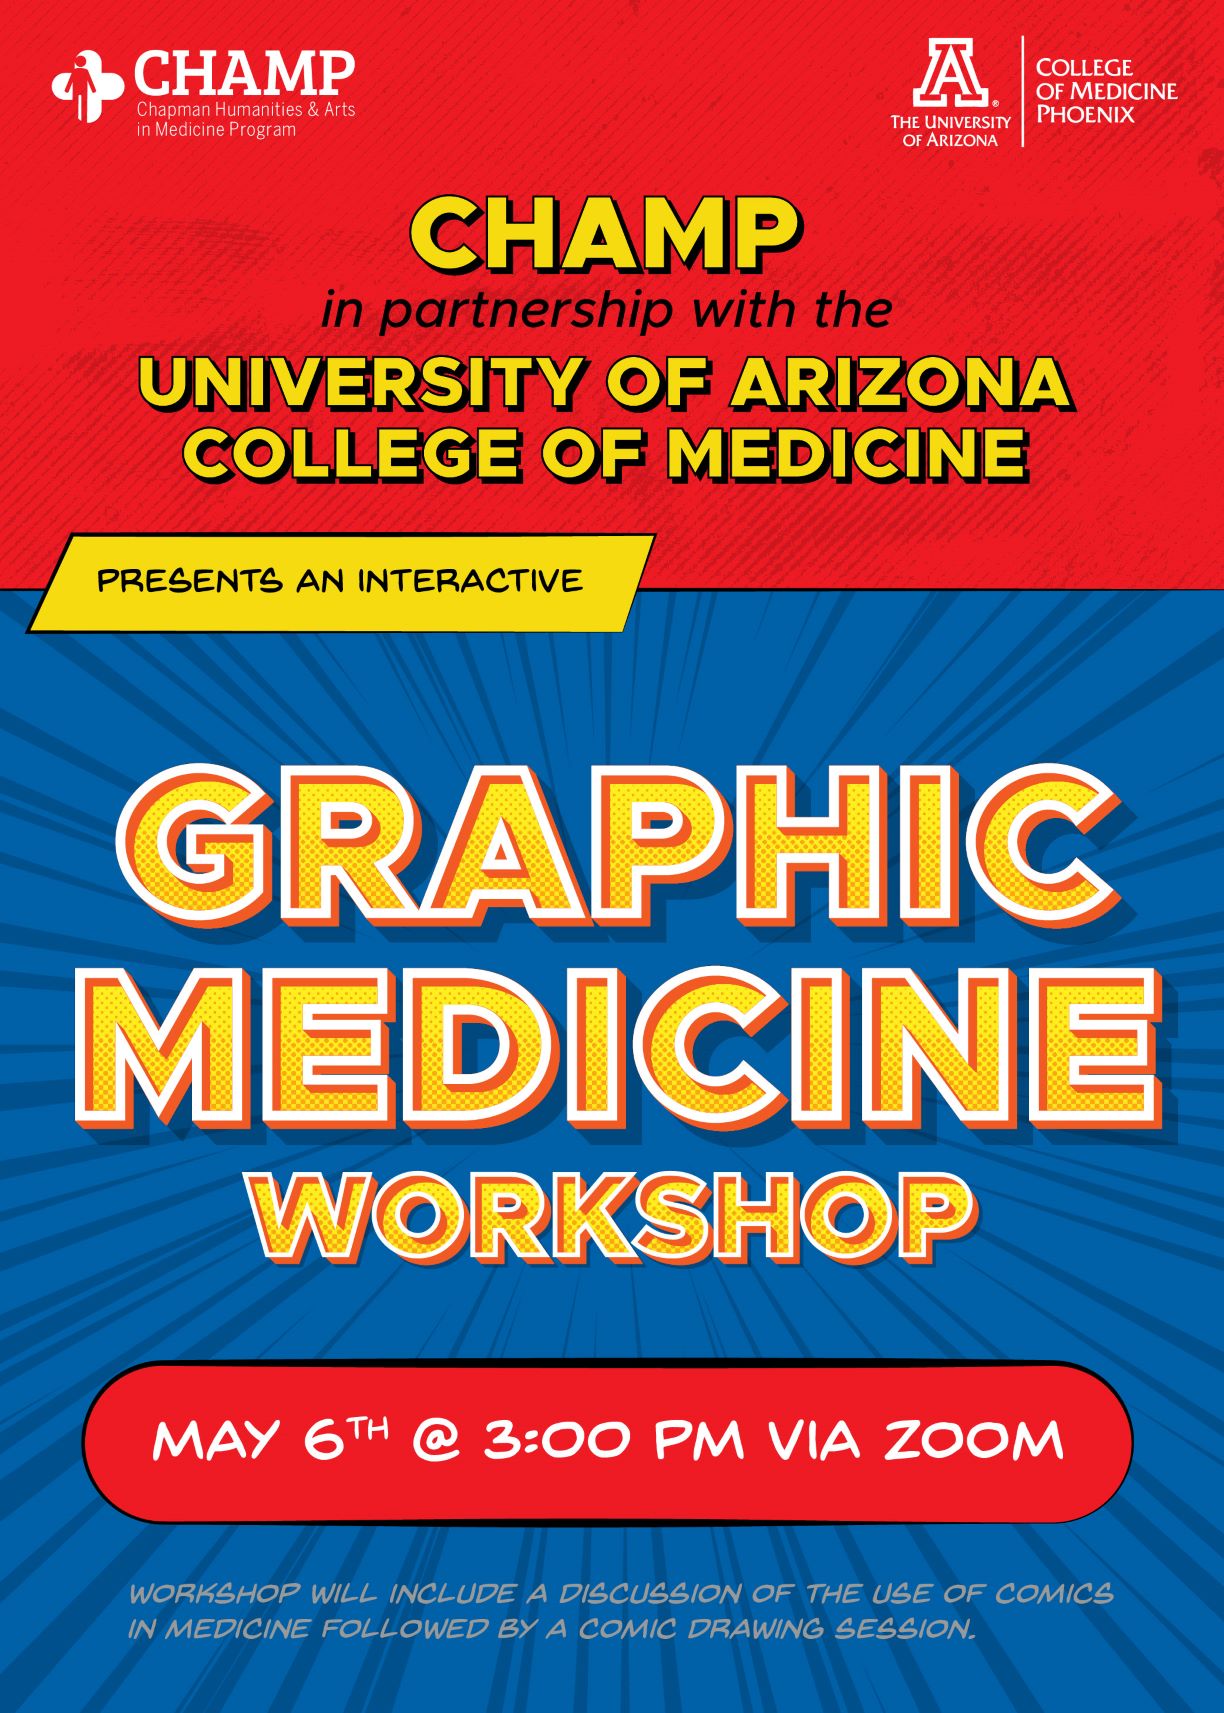 Graphic Medicine